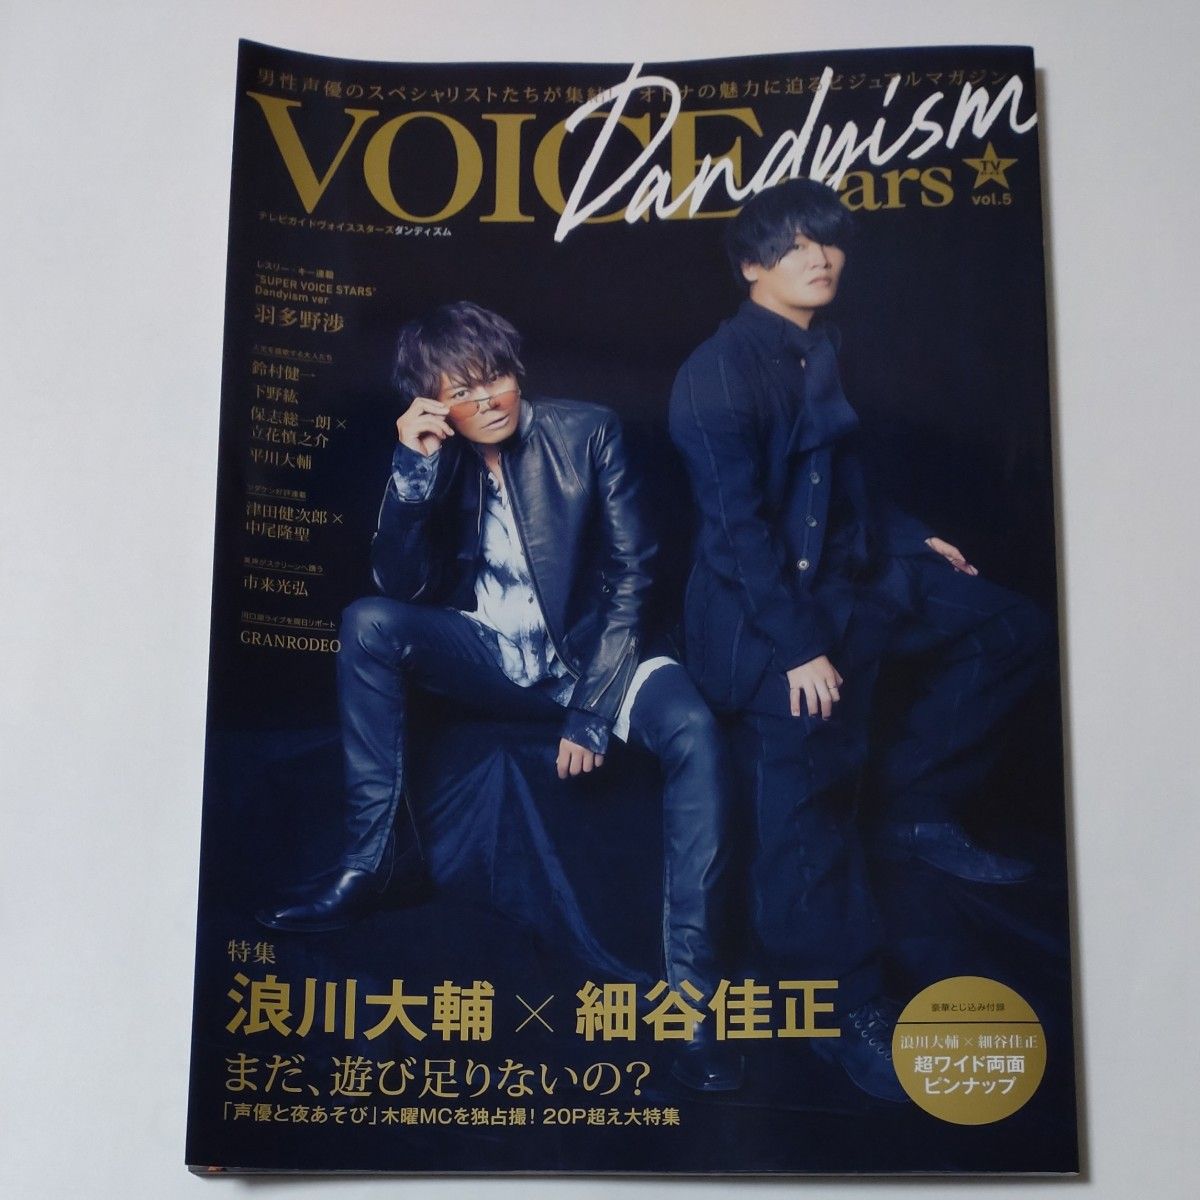 TVガイド VOICE stars Dandyism vol.5  表紙:浪川大輔×細谷佳正